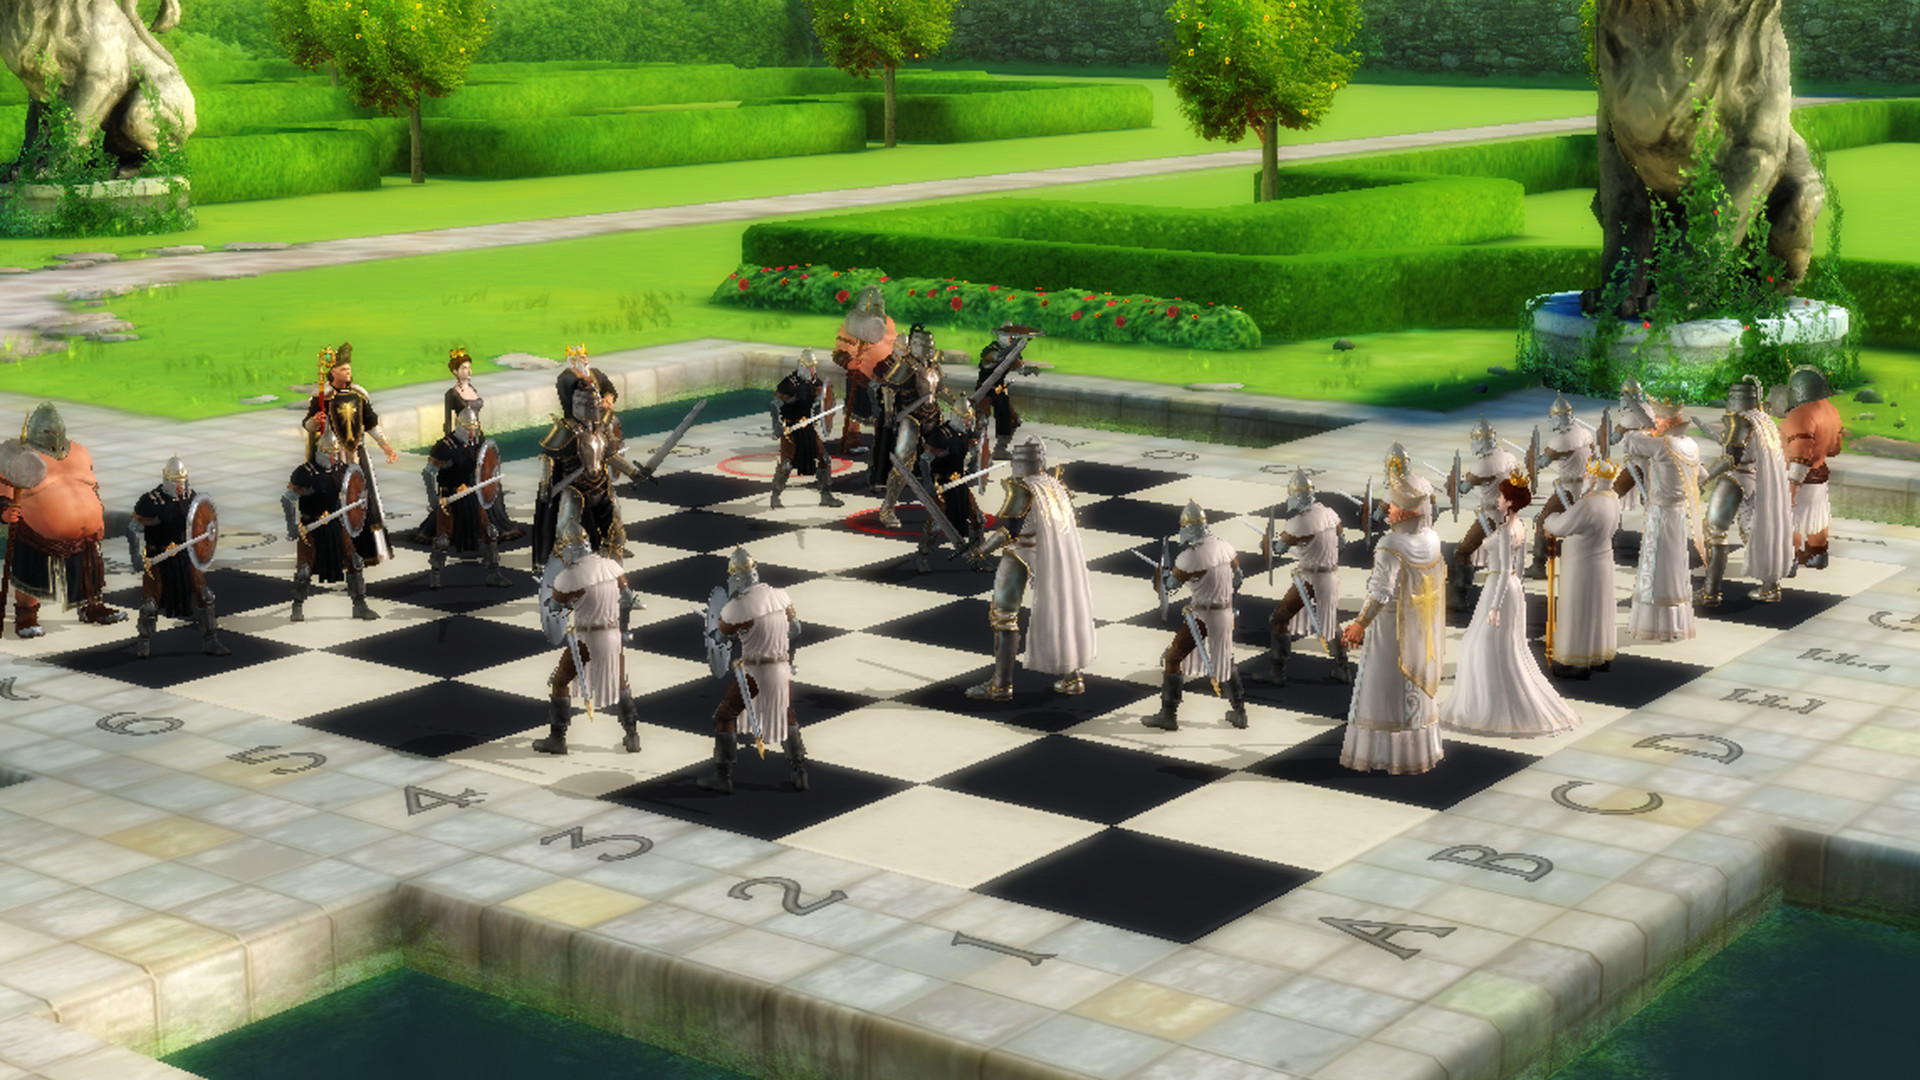 battle chess interplay